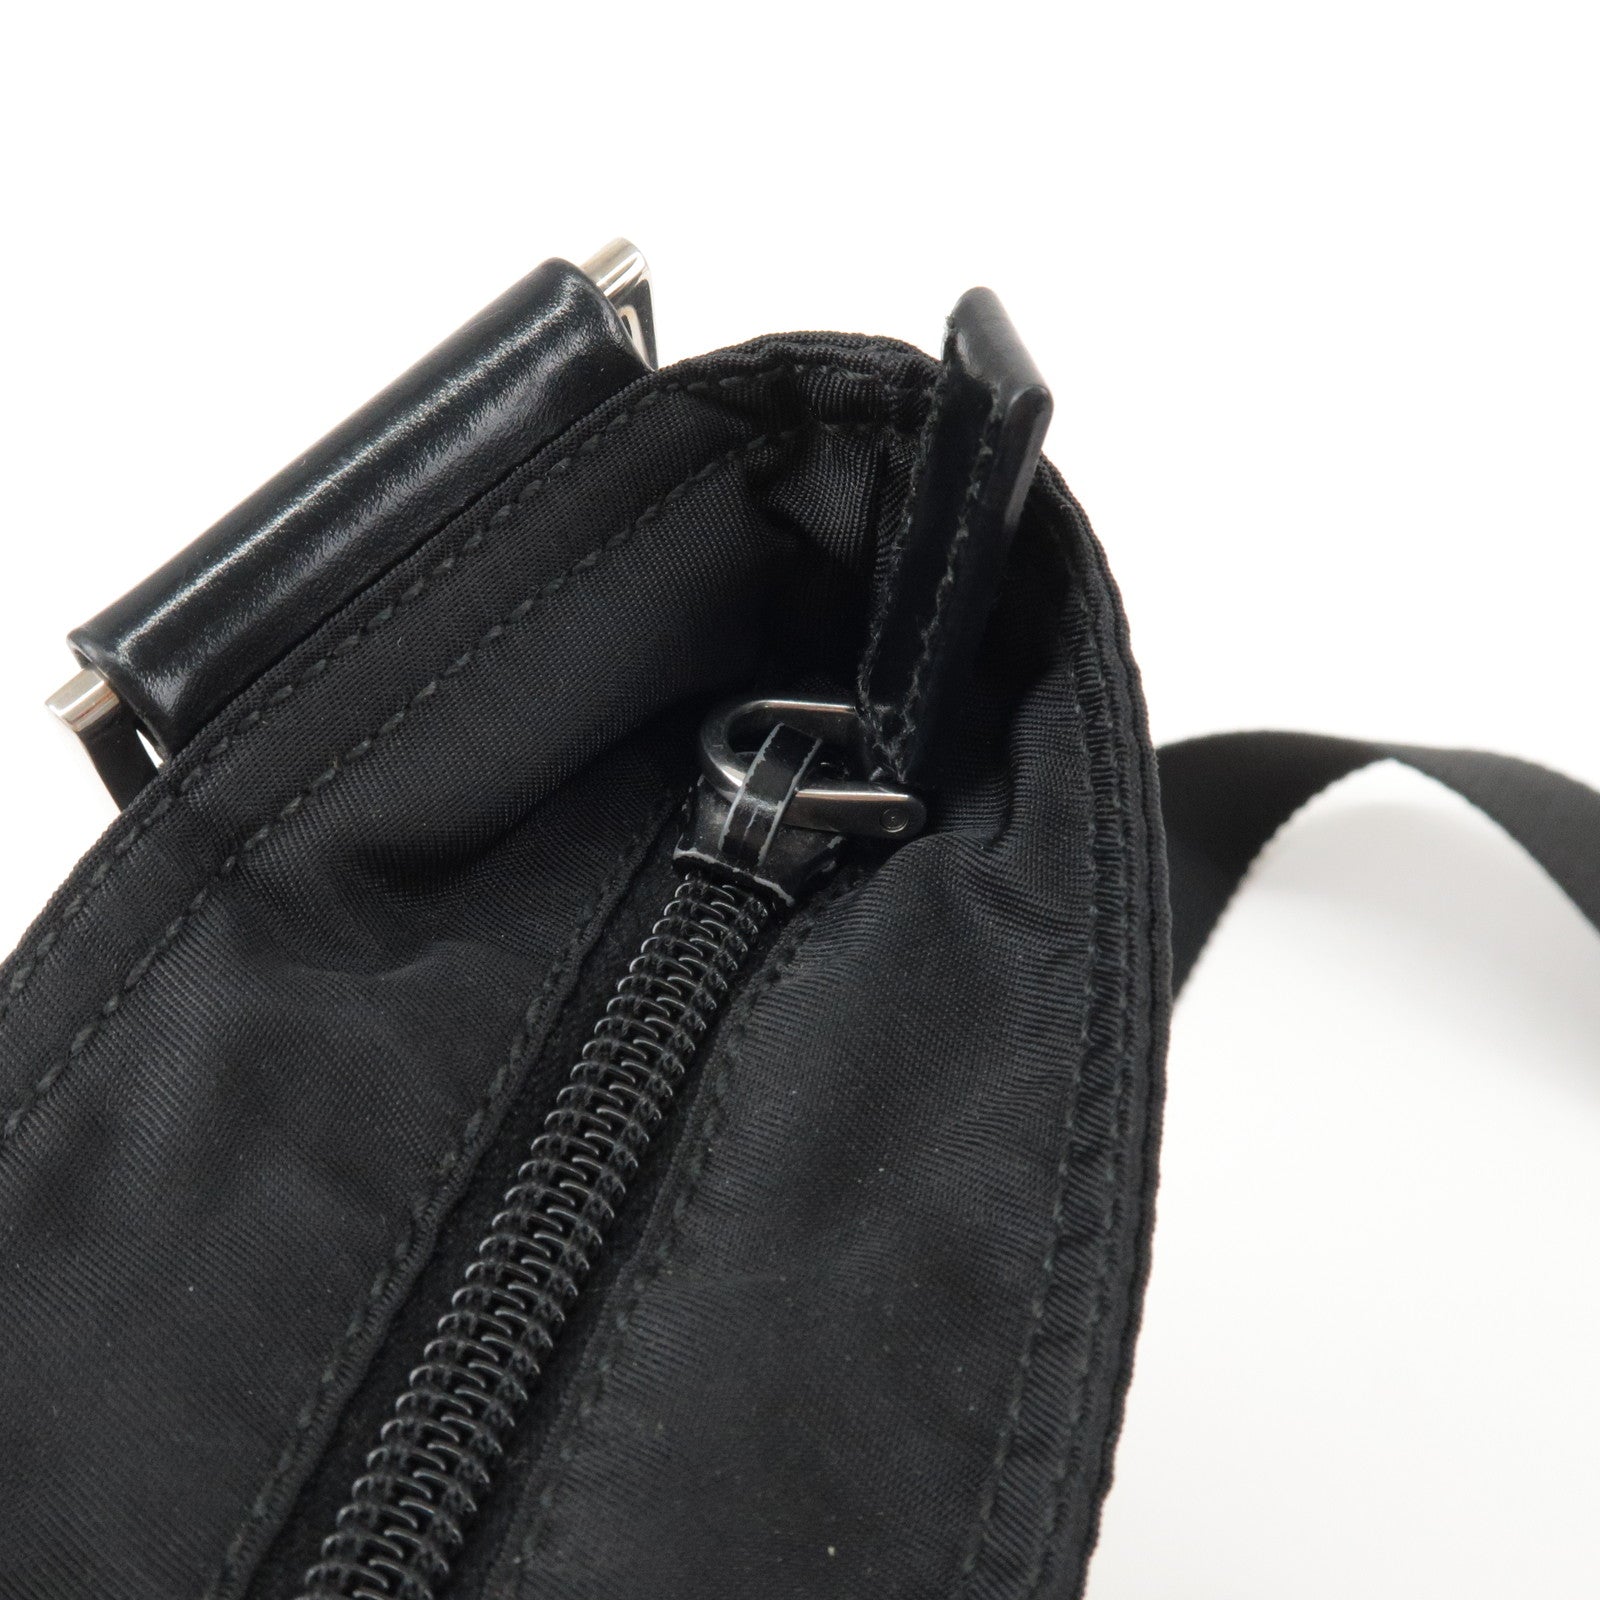 Prada PRADA BN1057 Nylon Leather Black Tote Shoulder Bag 2way Unisex